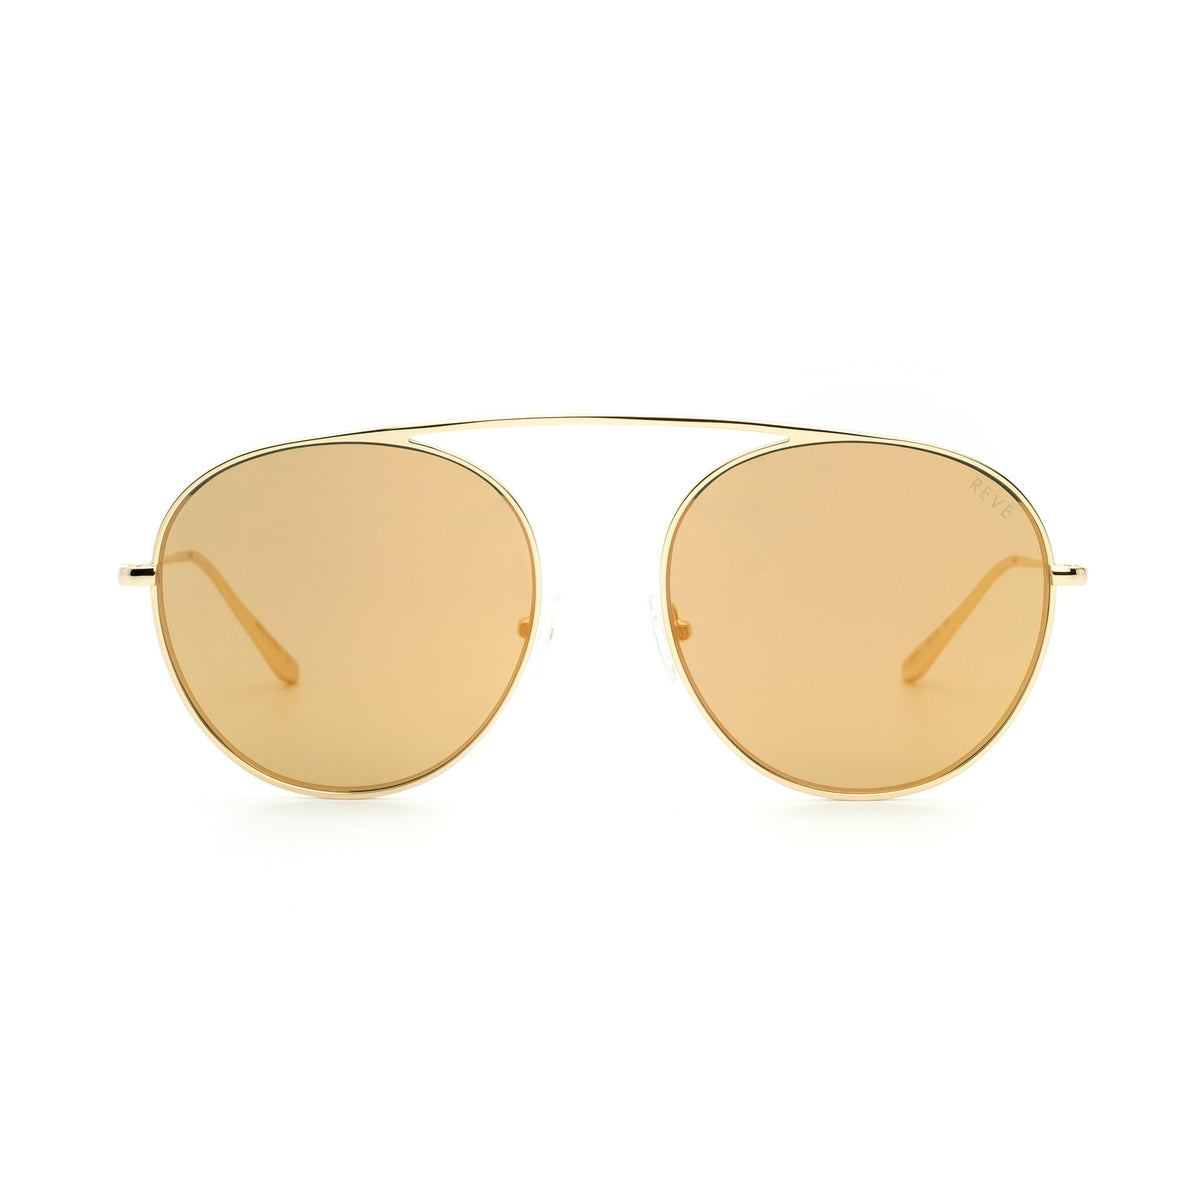 4AM | Gold | Aviator Sunglasses - Asian Fit